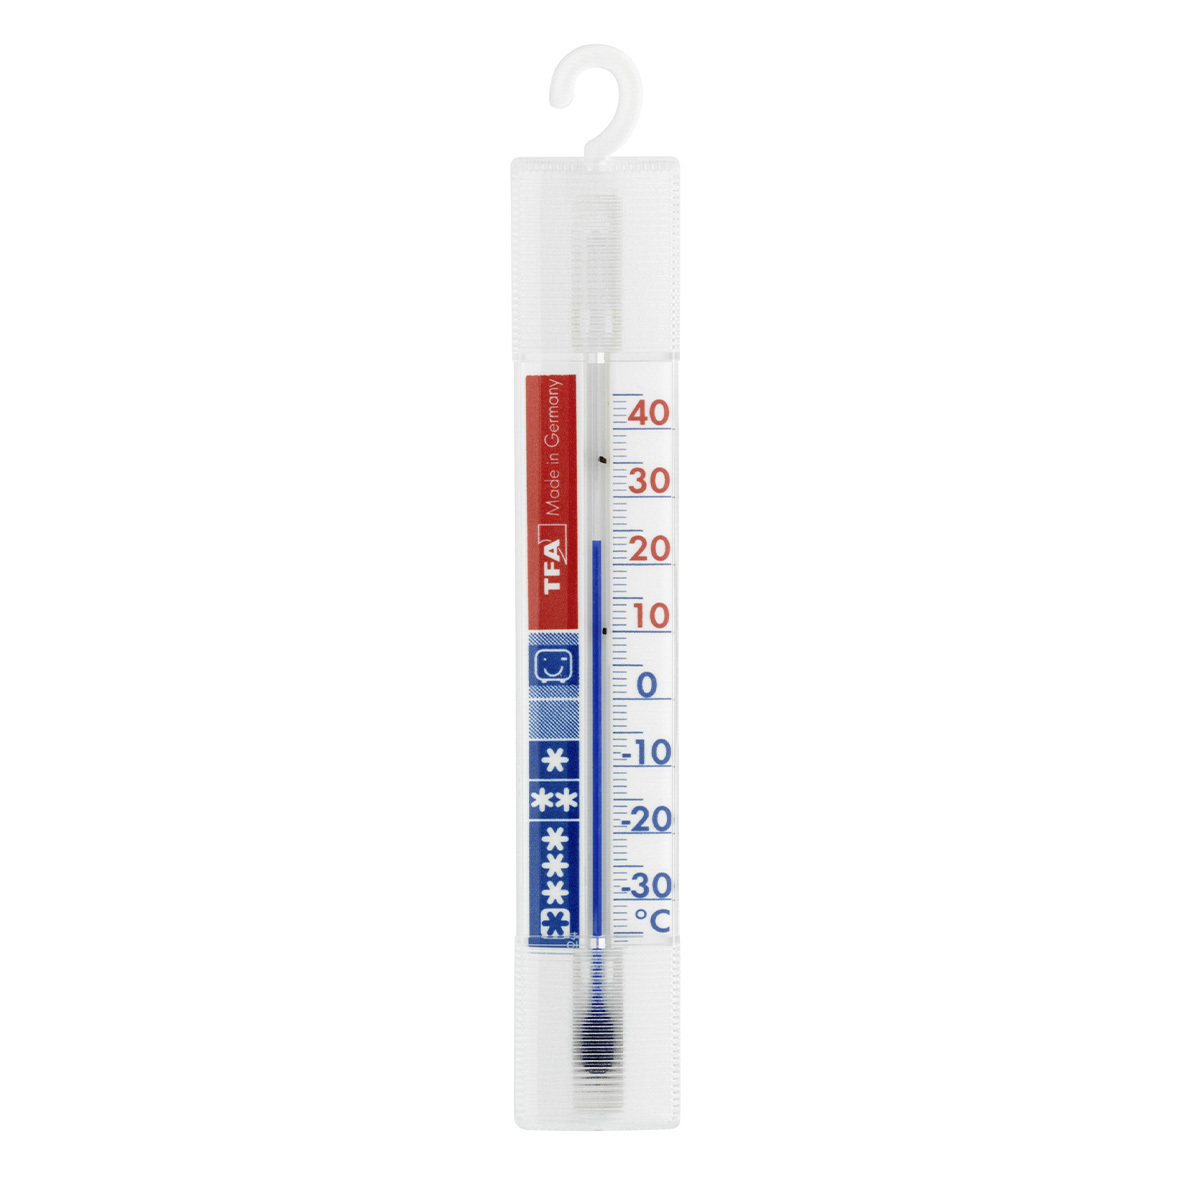 Refrigerator and Freezer Thermometer, Modelo 29006 - DeltaTrak